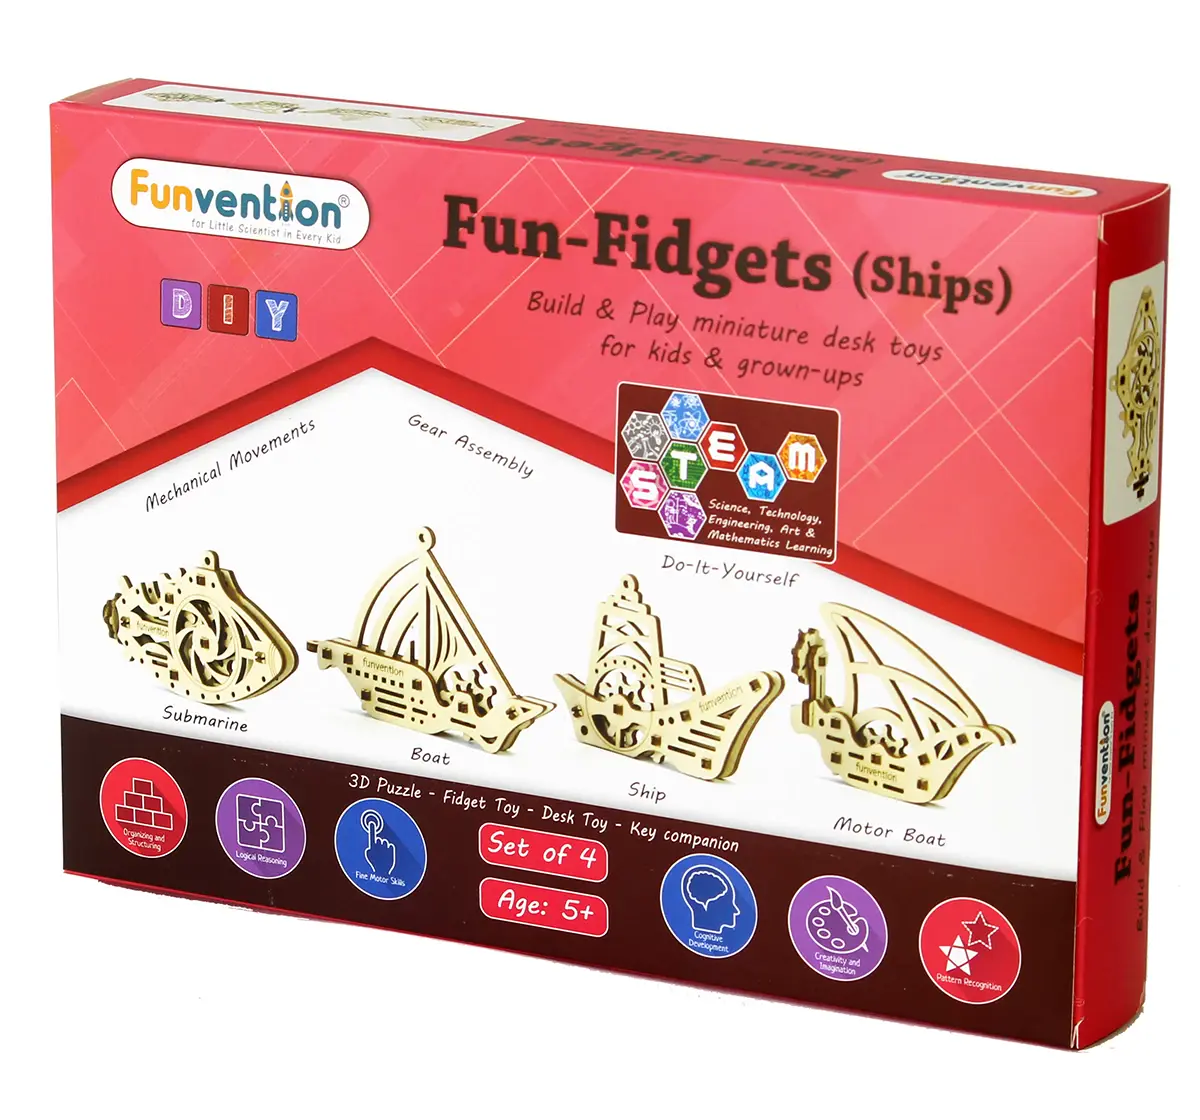 Funvention Fun Fidgets - Ships - Set Of 4 Models Stem for Kids Age 5Y+